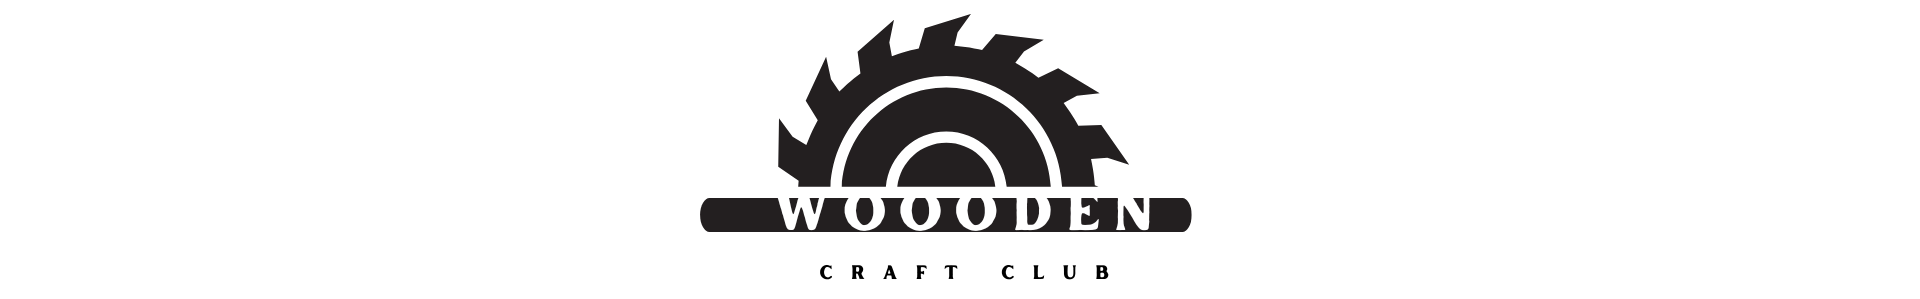 woodwncraftclub